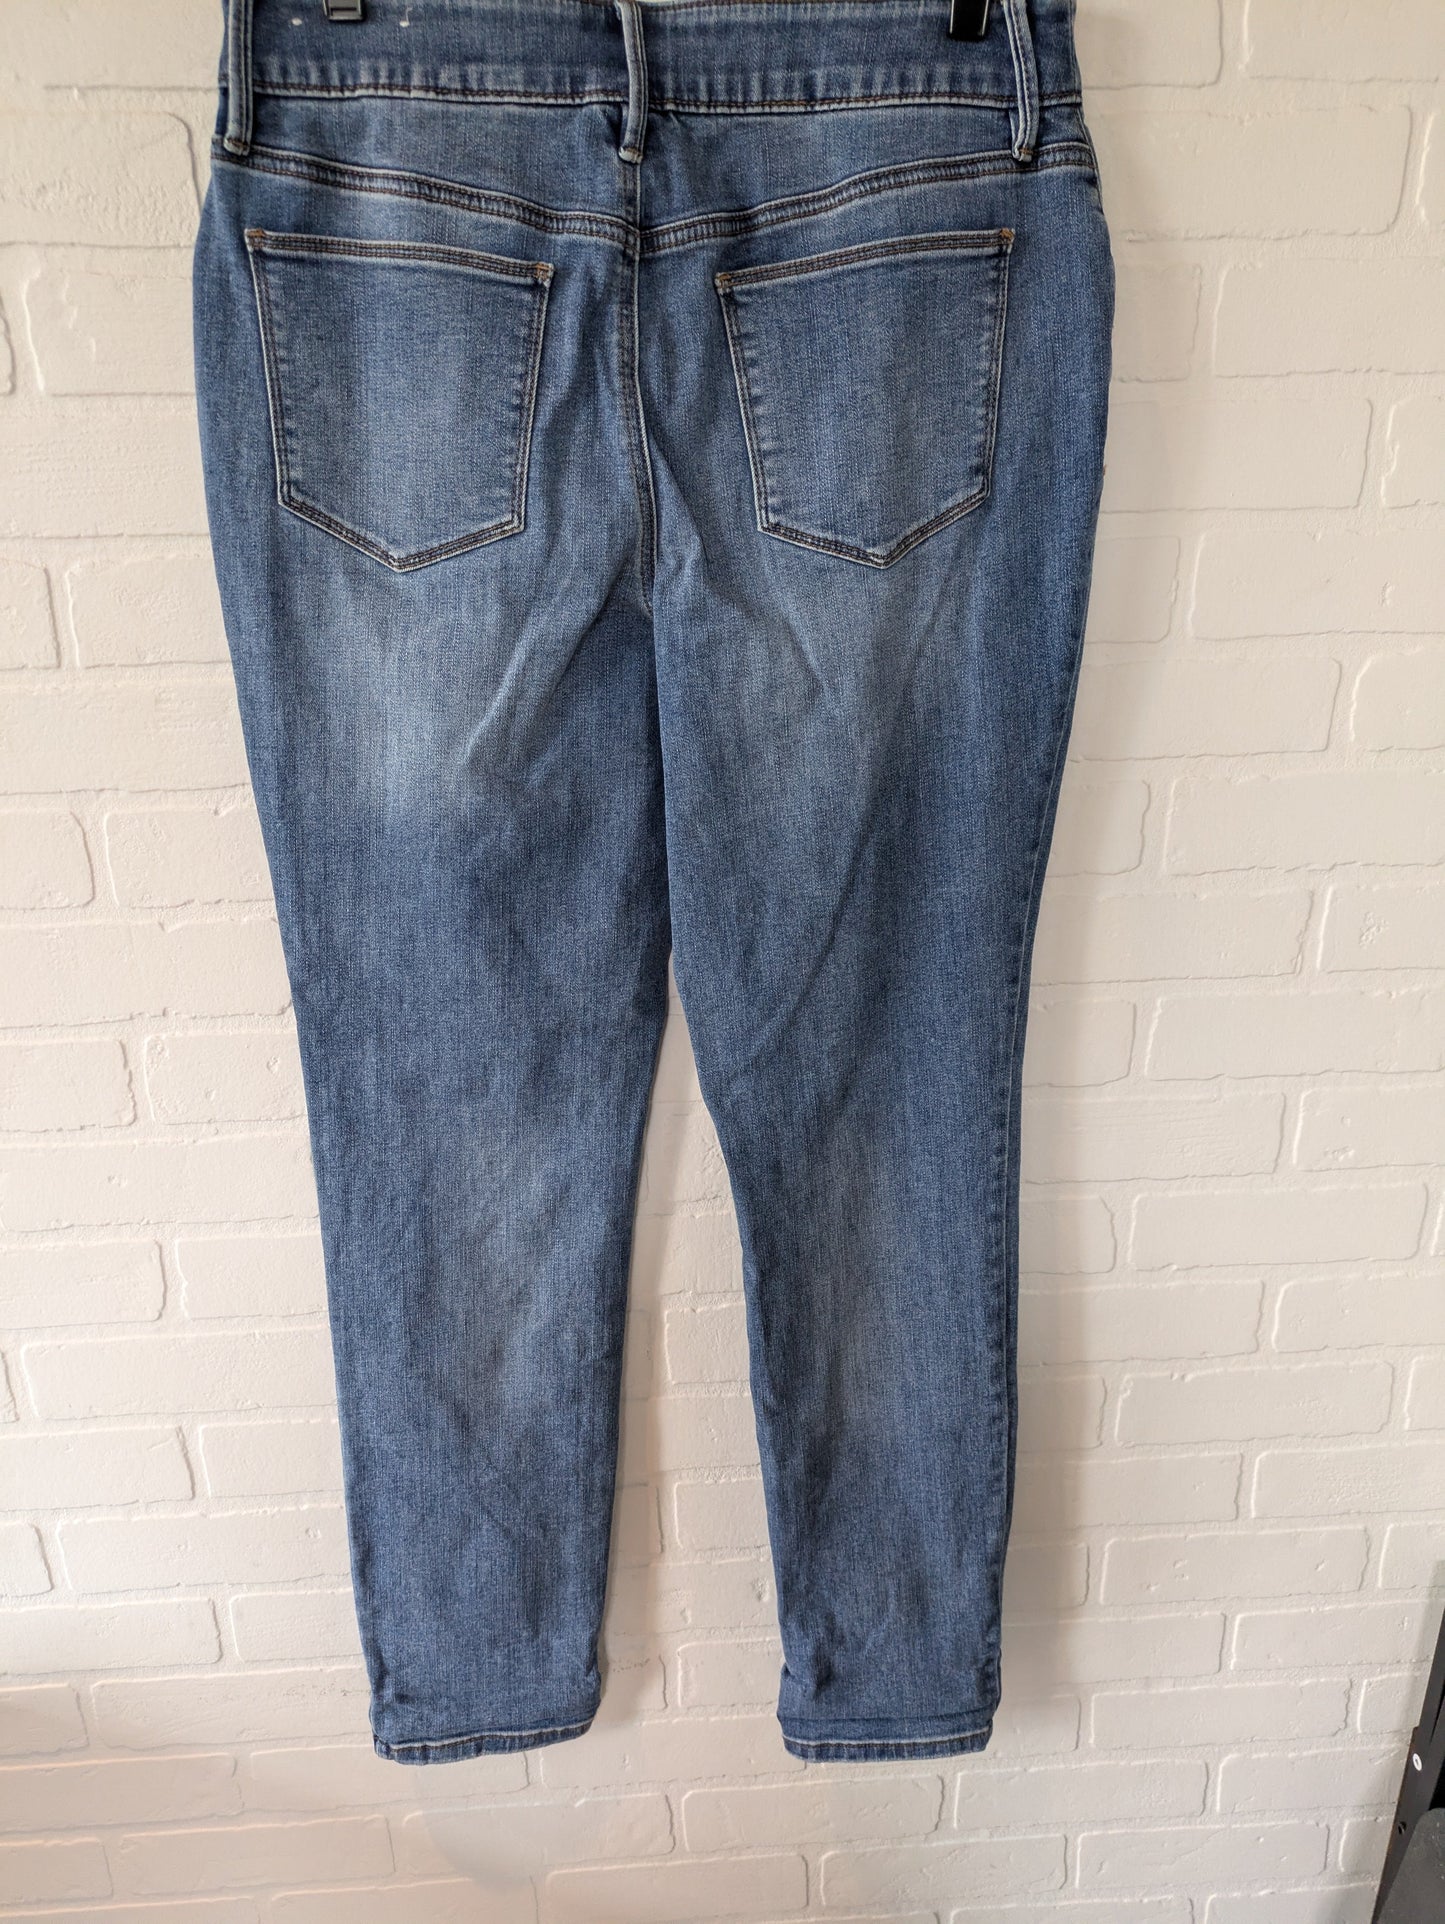 Blue Denim Jeans Jeggings Chicos, Size 8